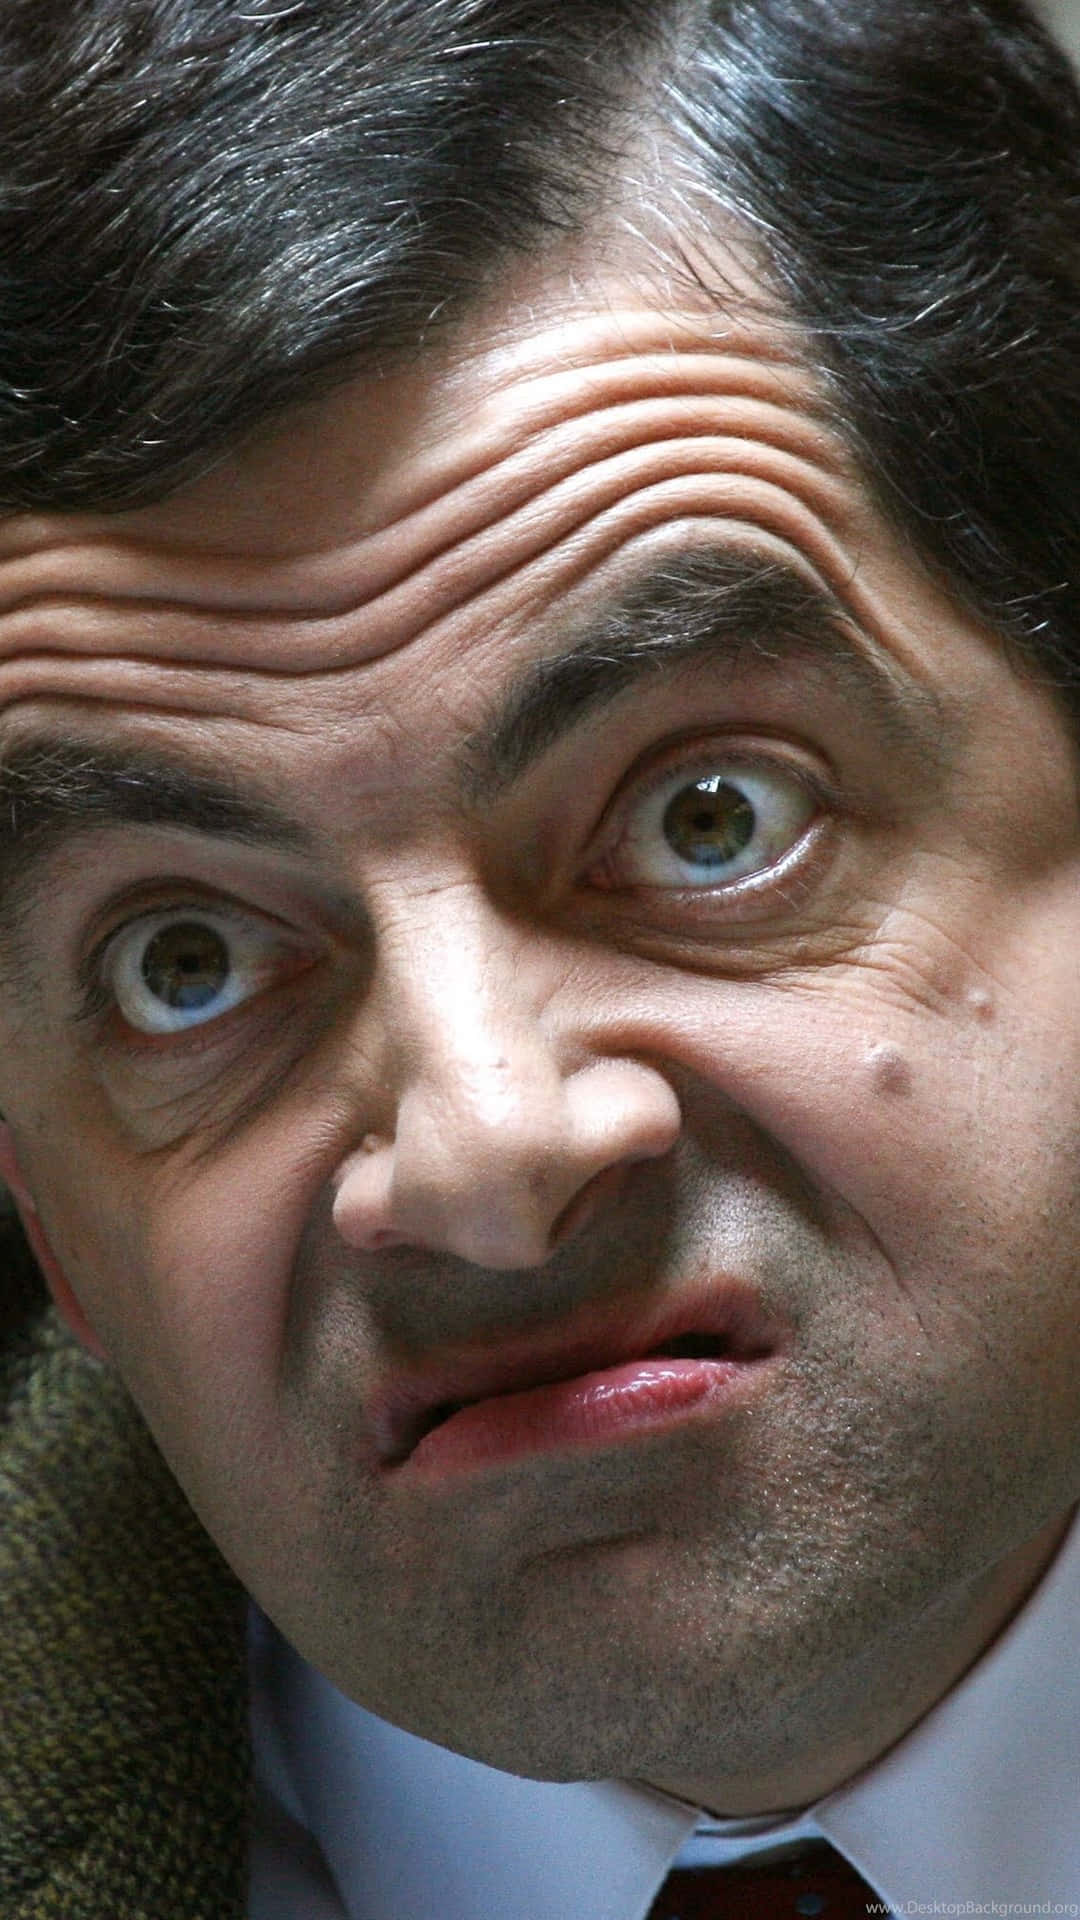 Mr. Bean in his Mini Cooper making a funny face